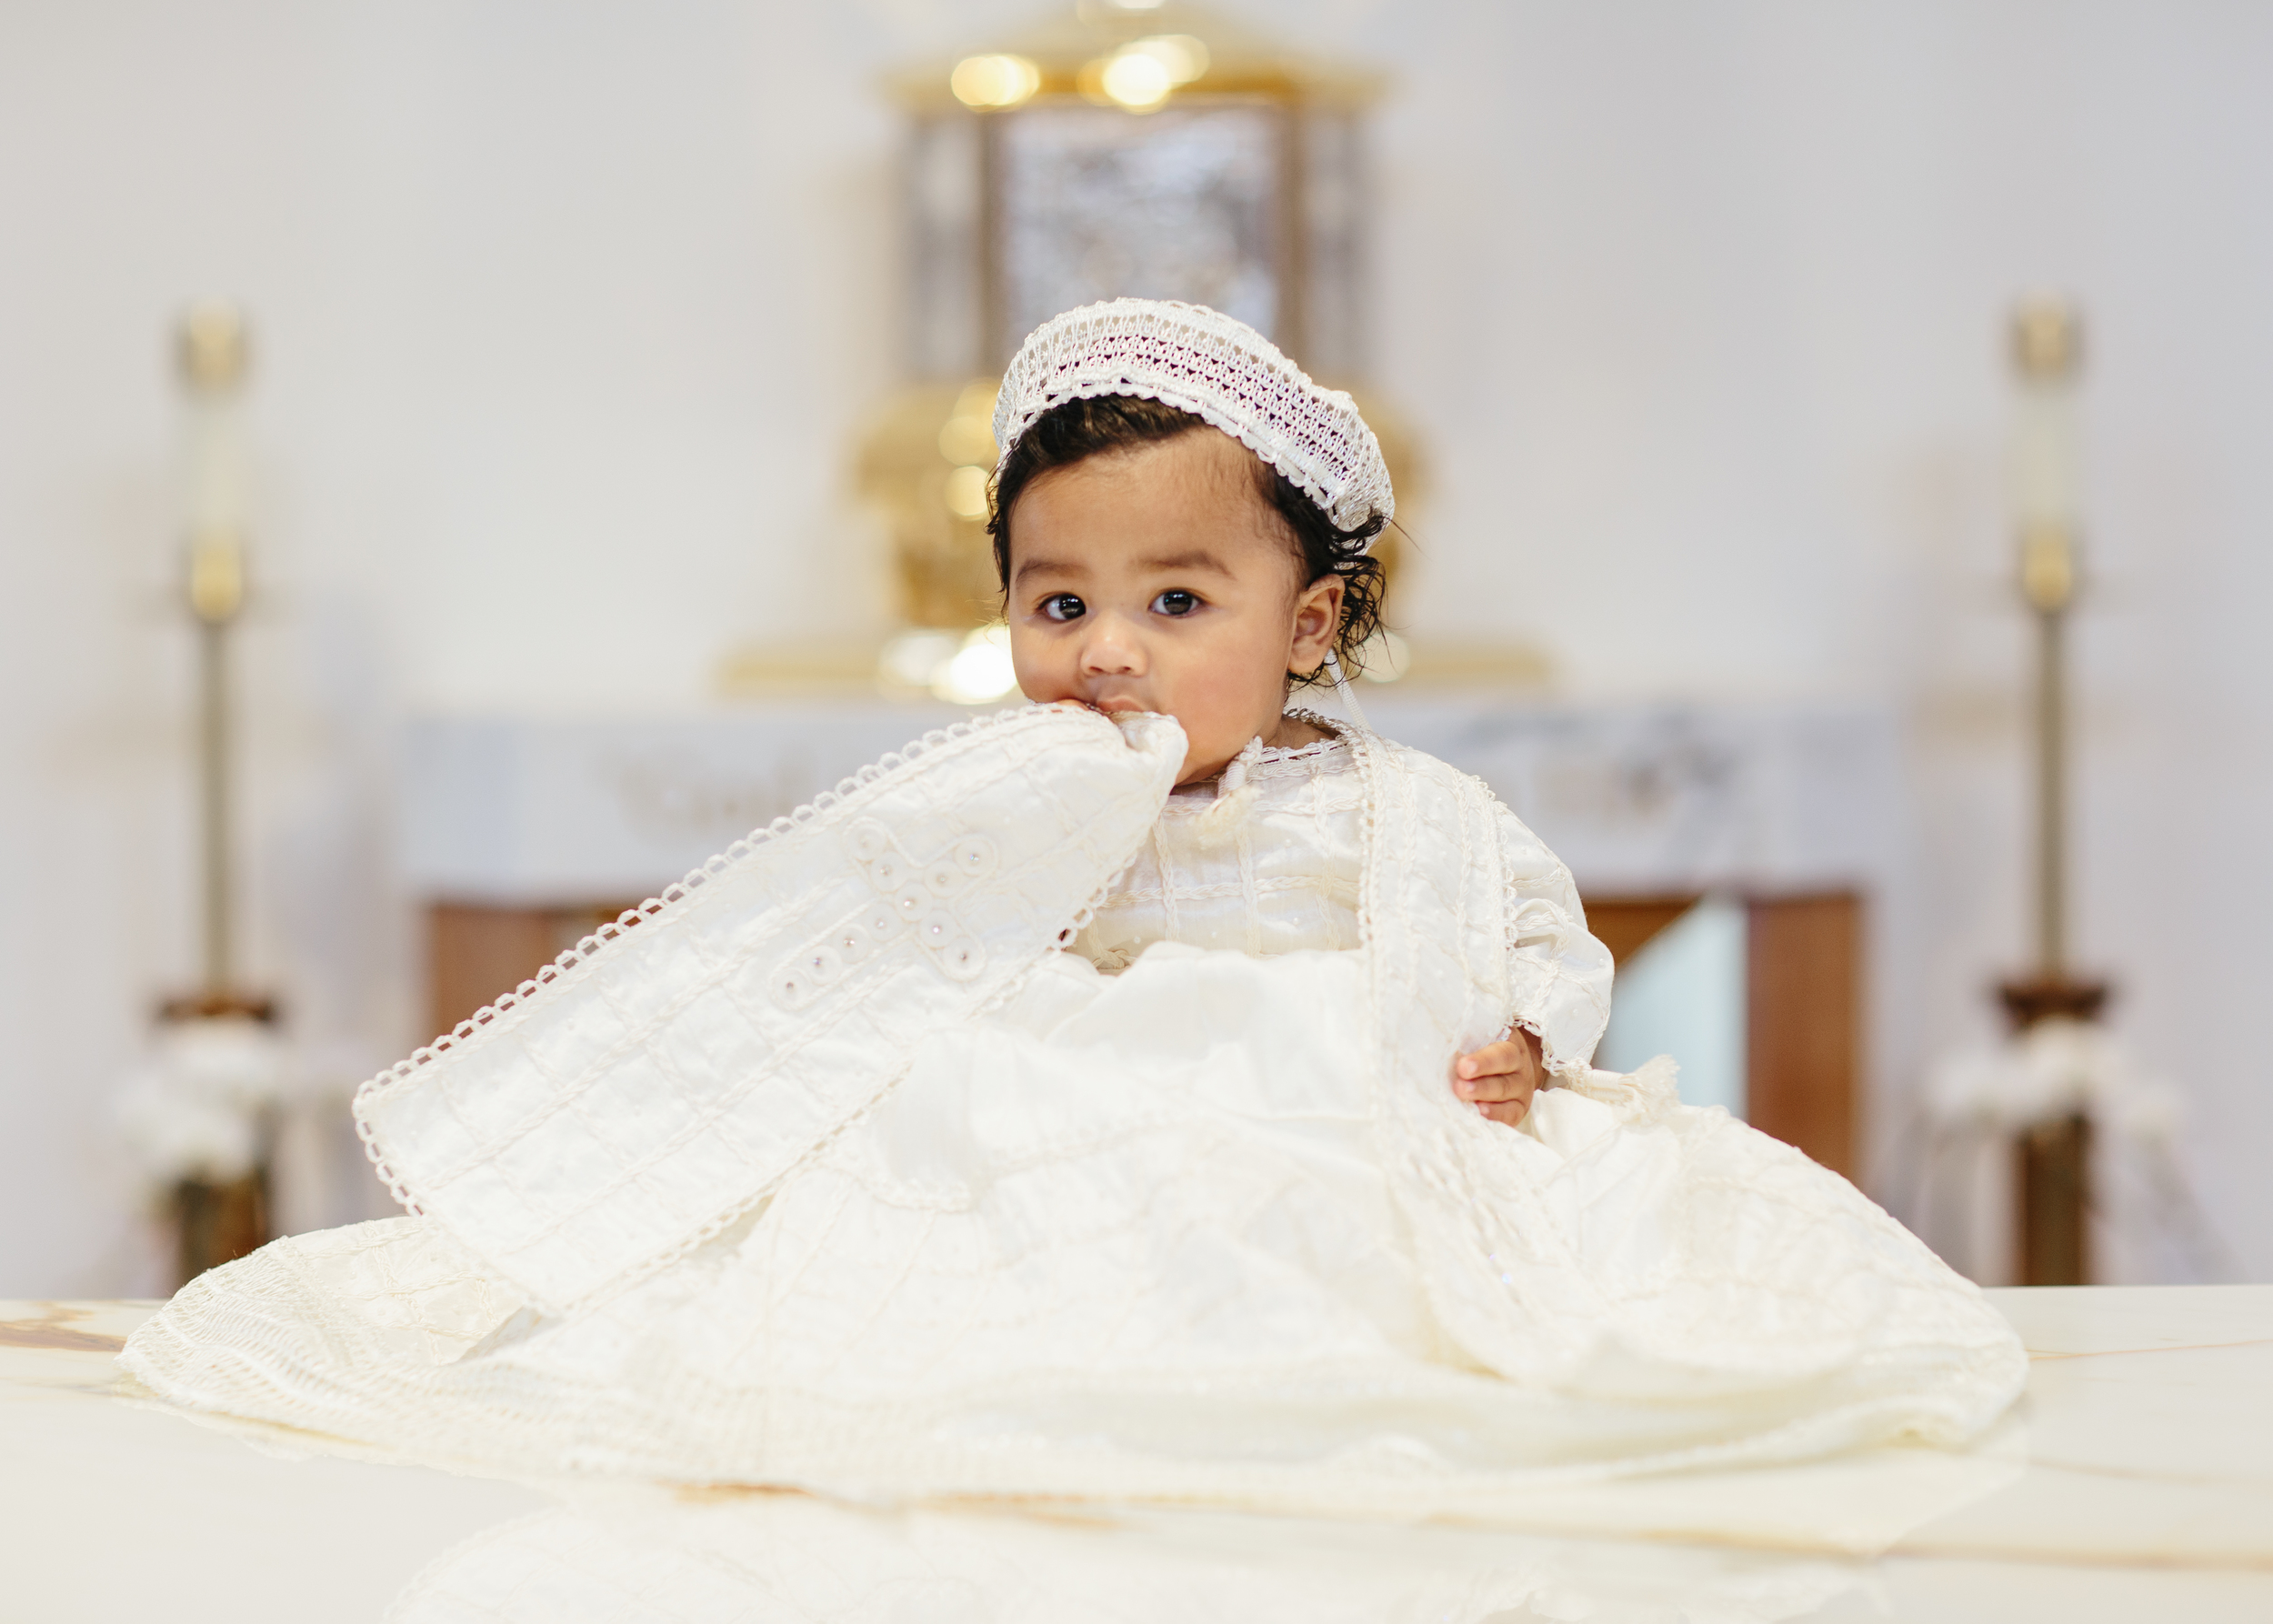 traditional catholic baptism gown